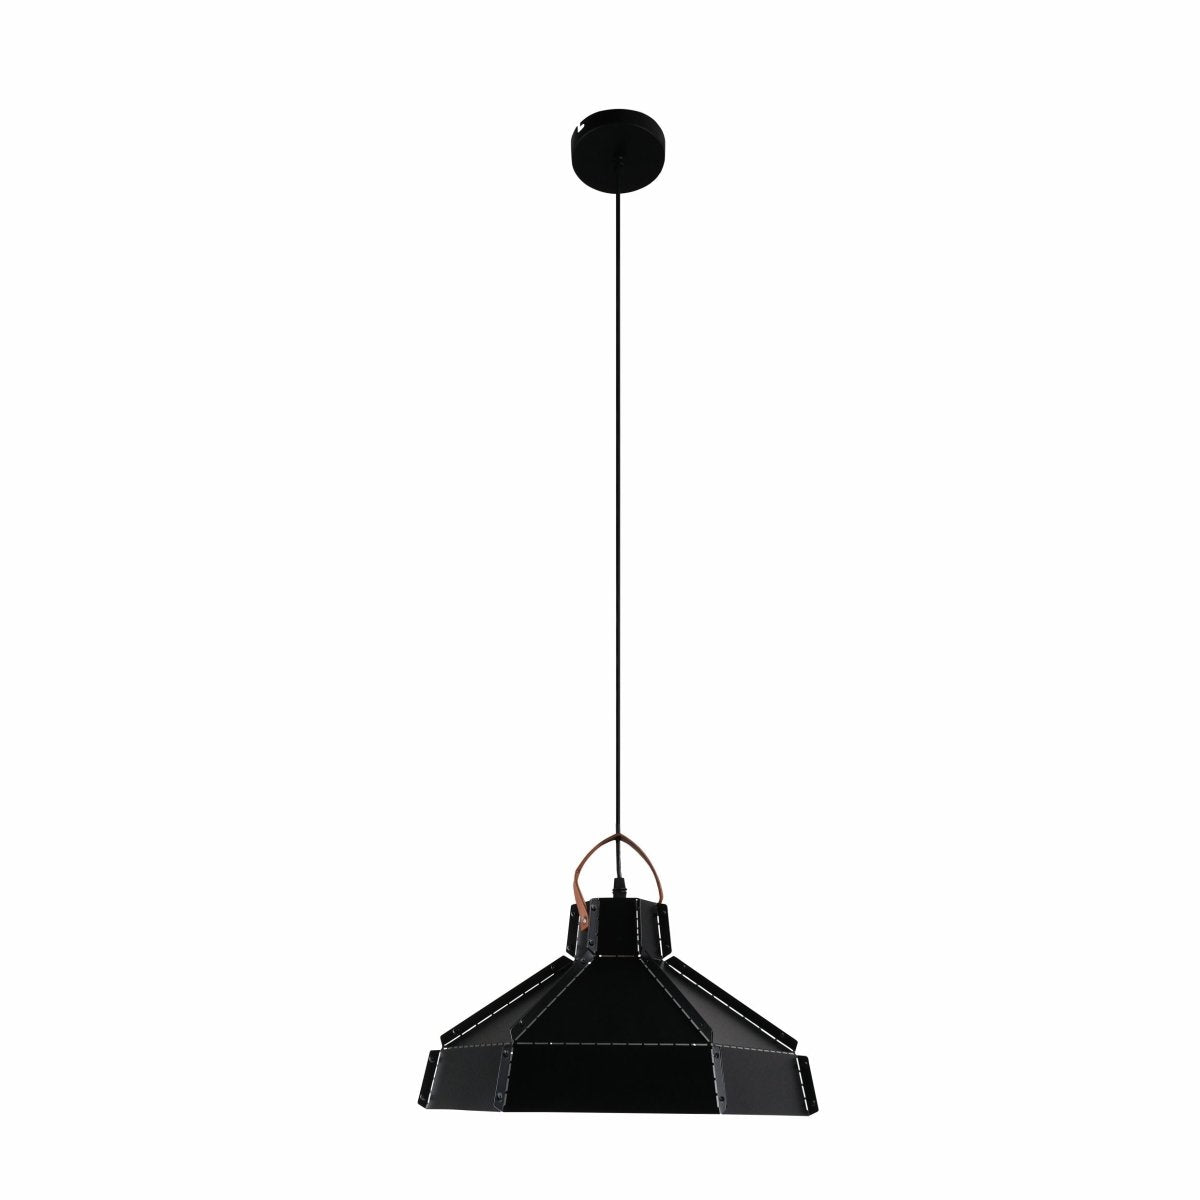 Main image of Esagono Maxi Black Metal Pendant Light with E27 Fitting | TEKLED 159-17352